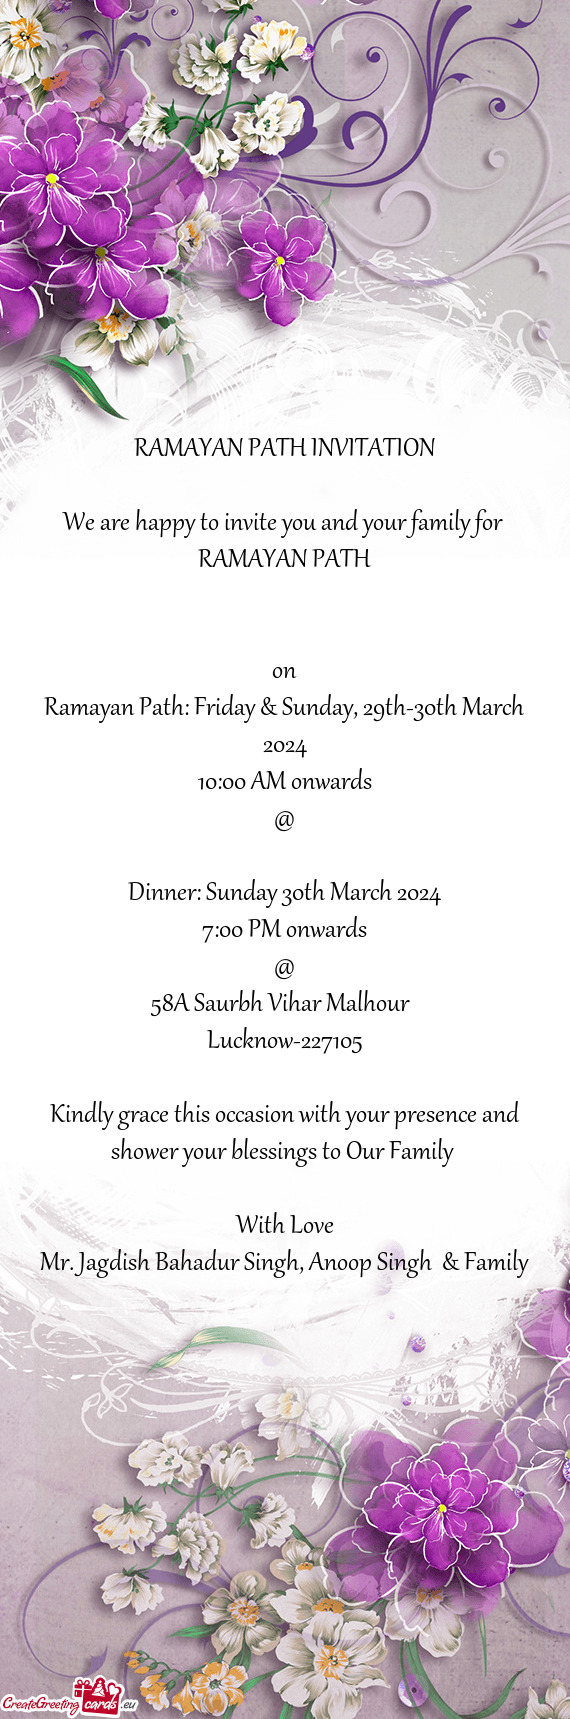 Ramayan Path: Friday & Sunday, 29th-30th March 2024